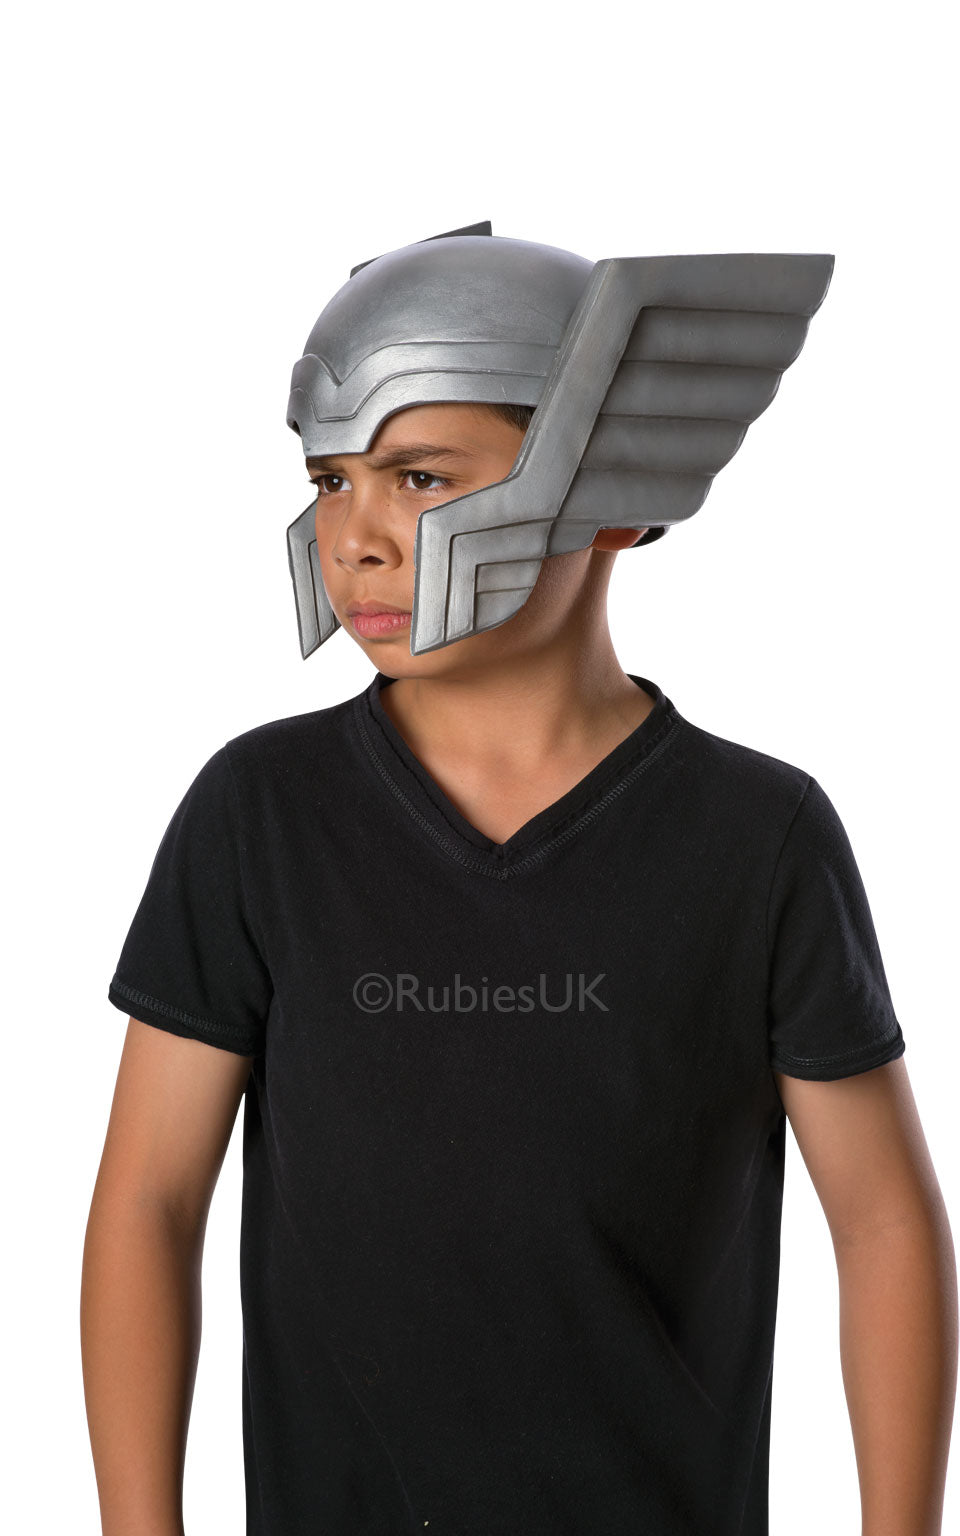 Mythological Superhero Thor's Mjolnir Helmet